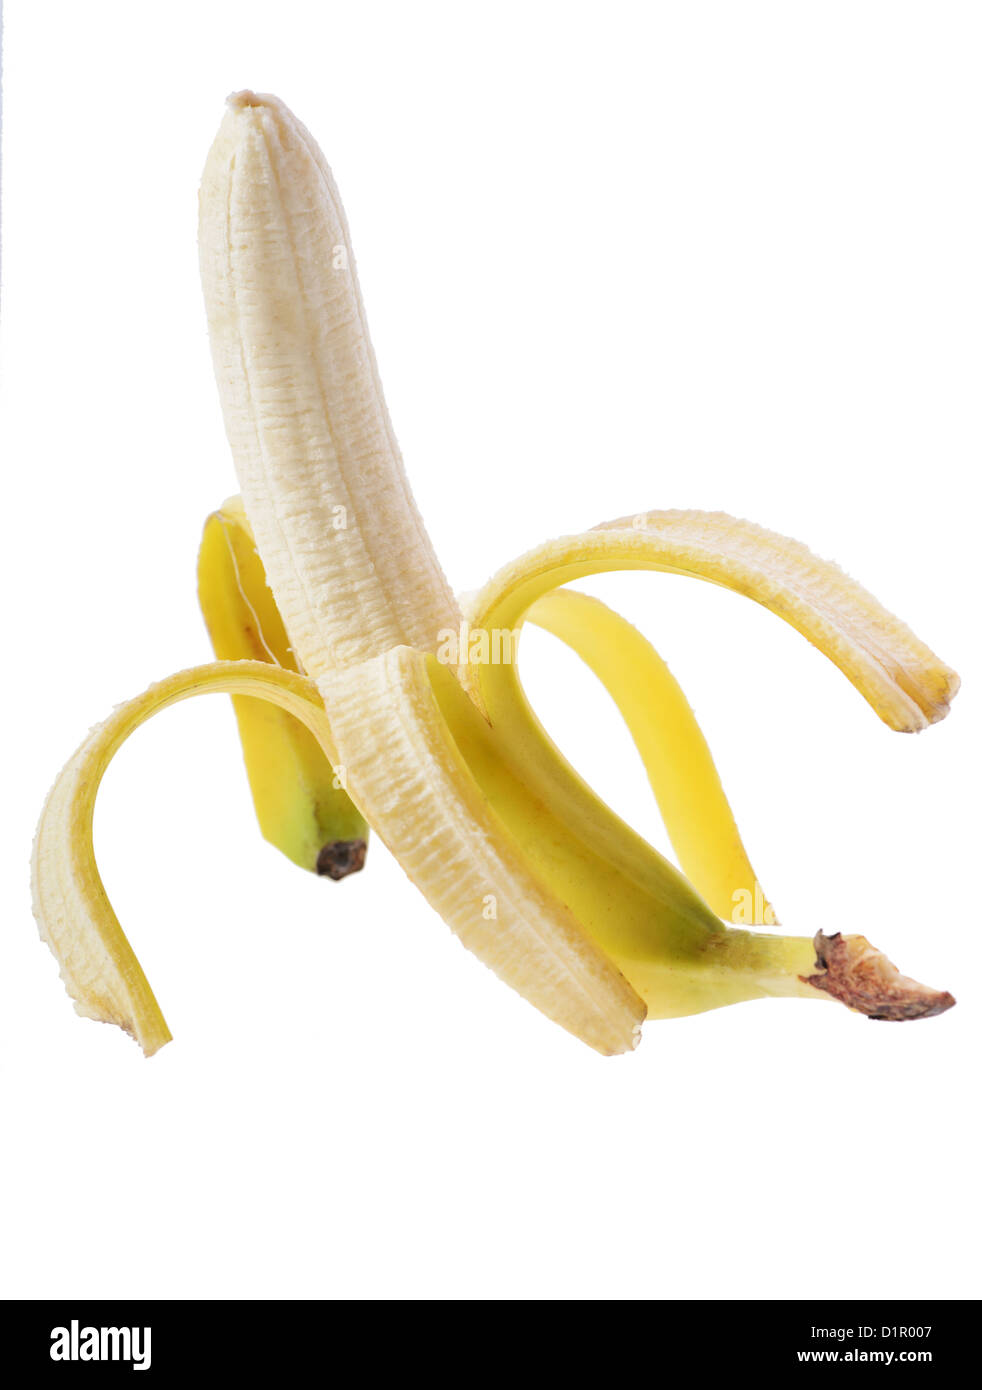 Abra banana aislado sobre fondo blanco. Foto de stock